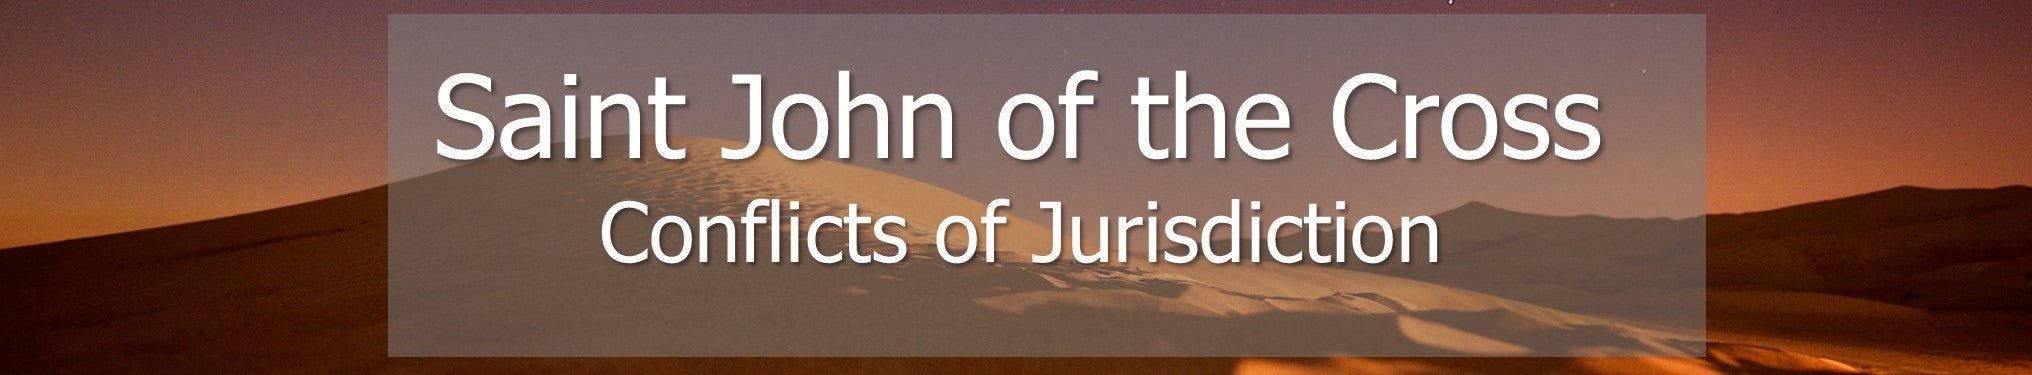 Saint John of the Cross - Conflicts of Jurisdiction